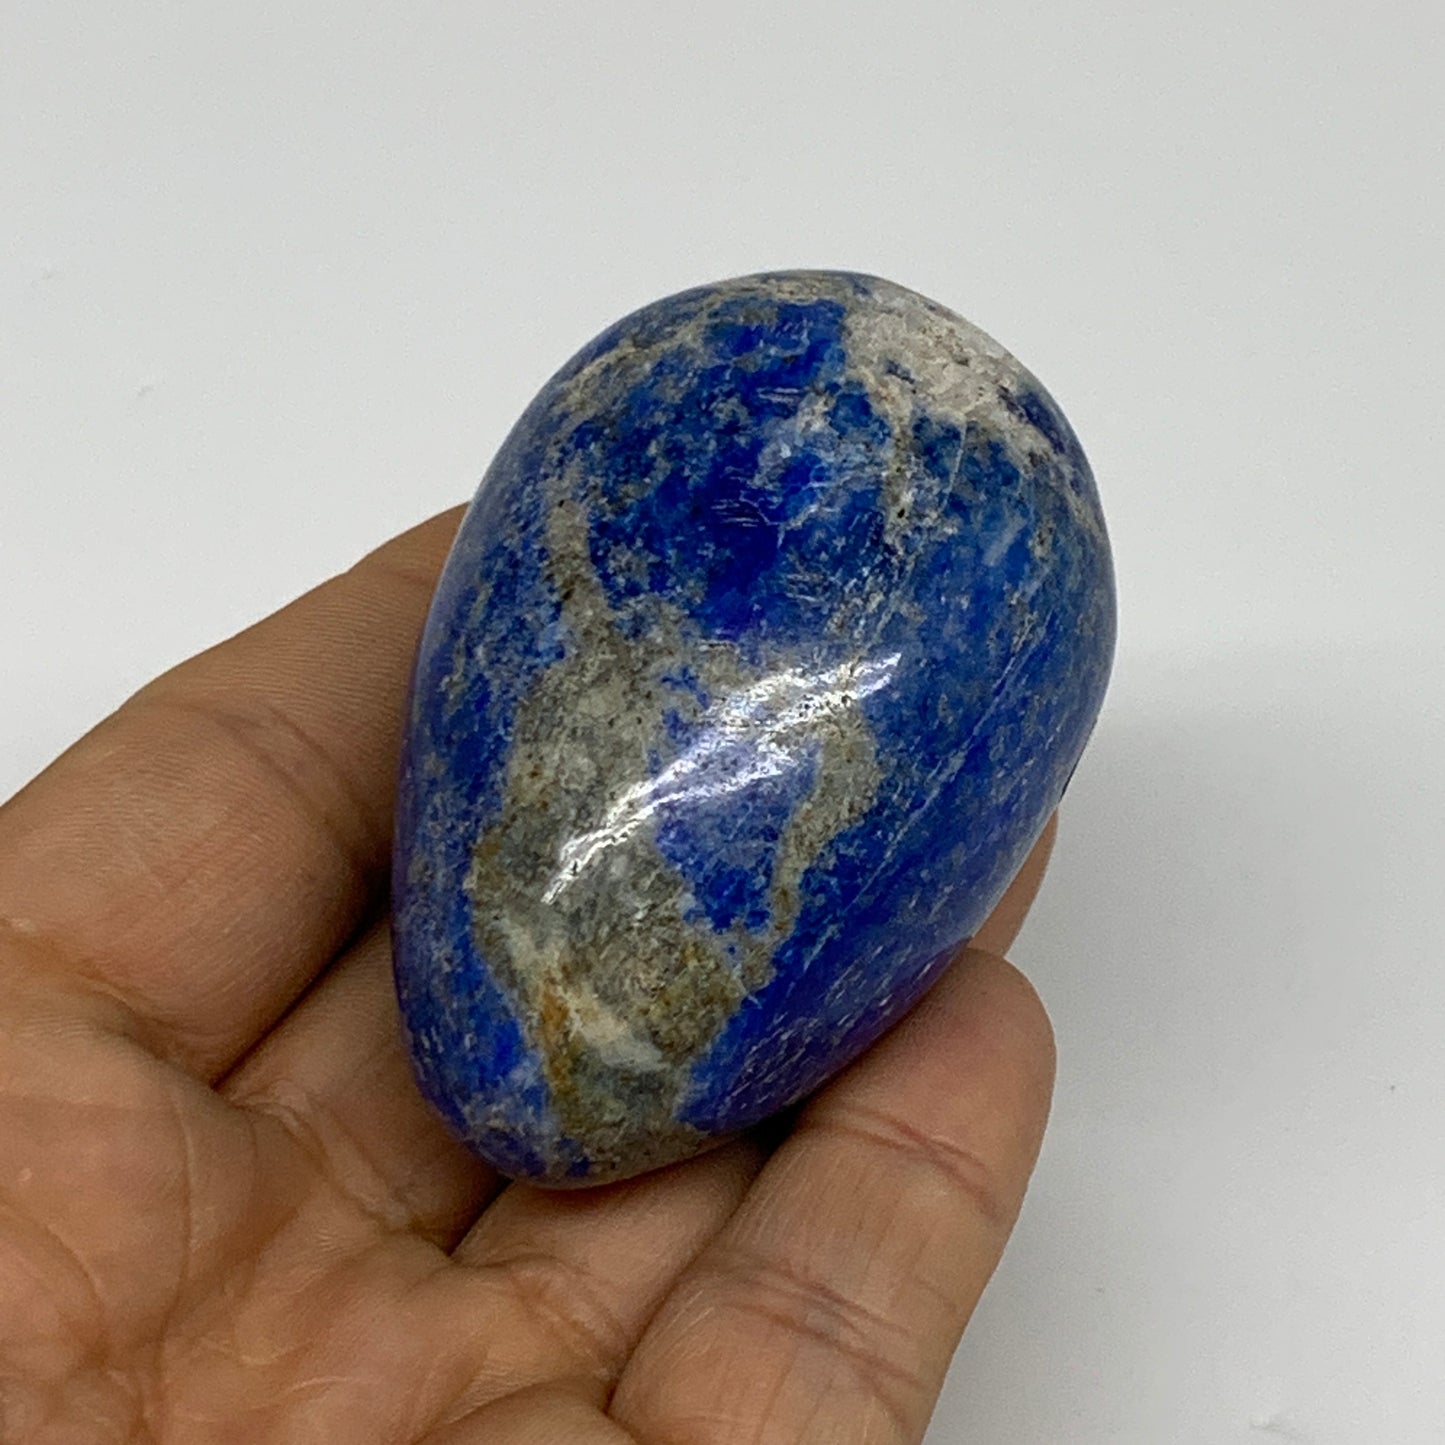 148.7g, 2.4"x1.6", Natural Lapis Lazuli Egg Polished, Clearance, B33372